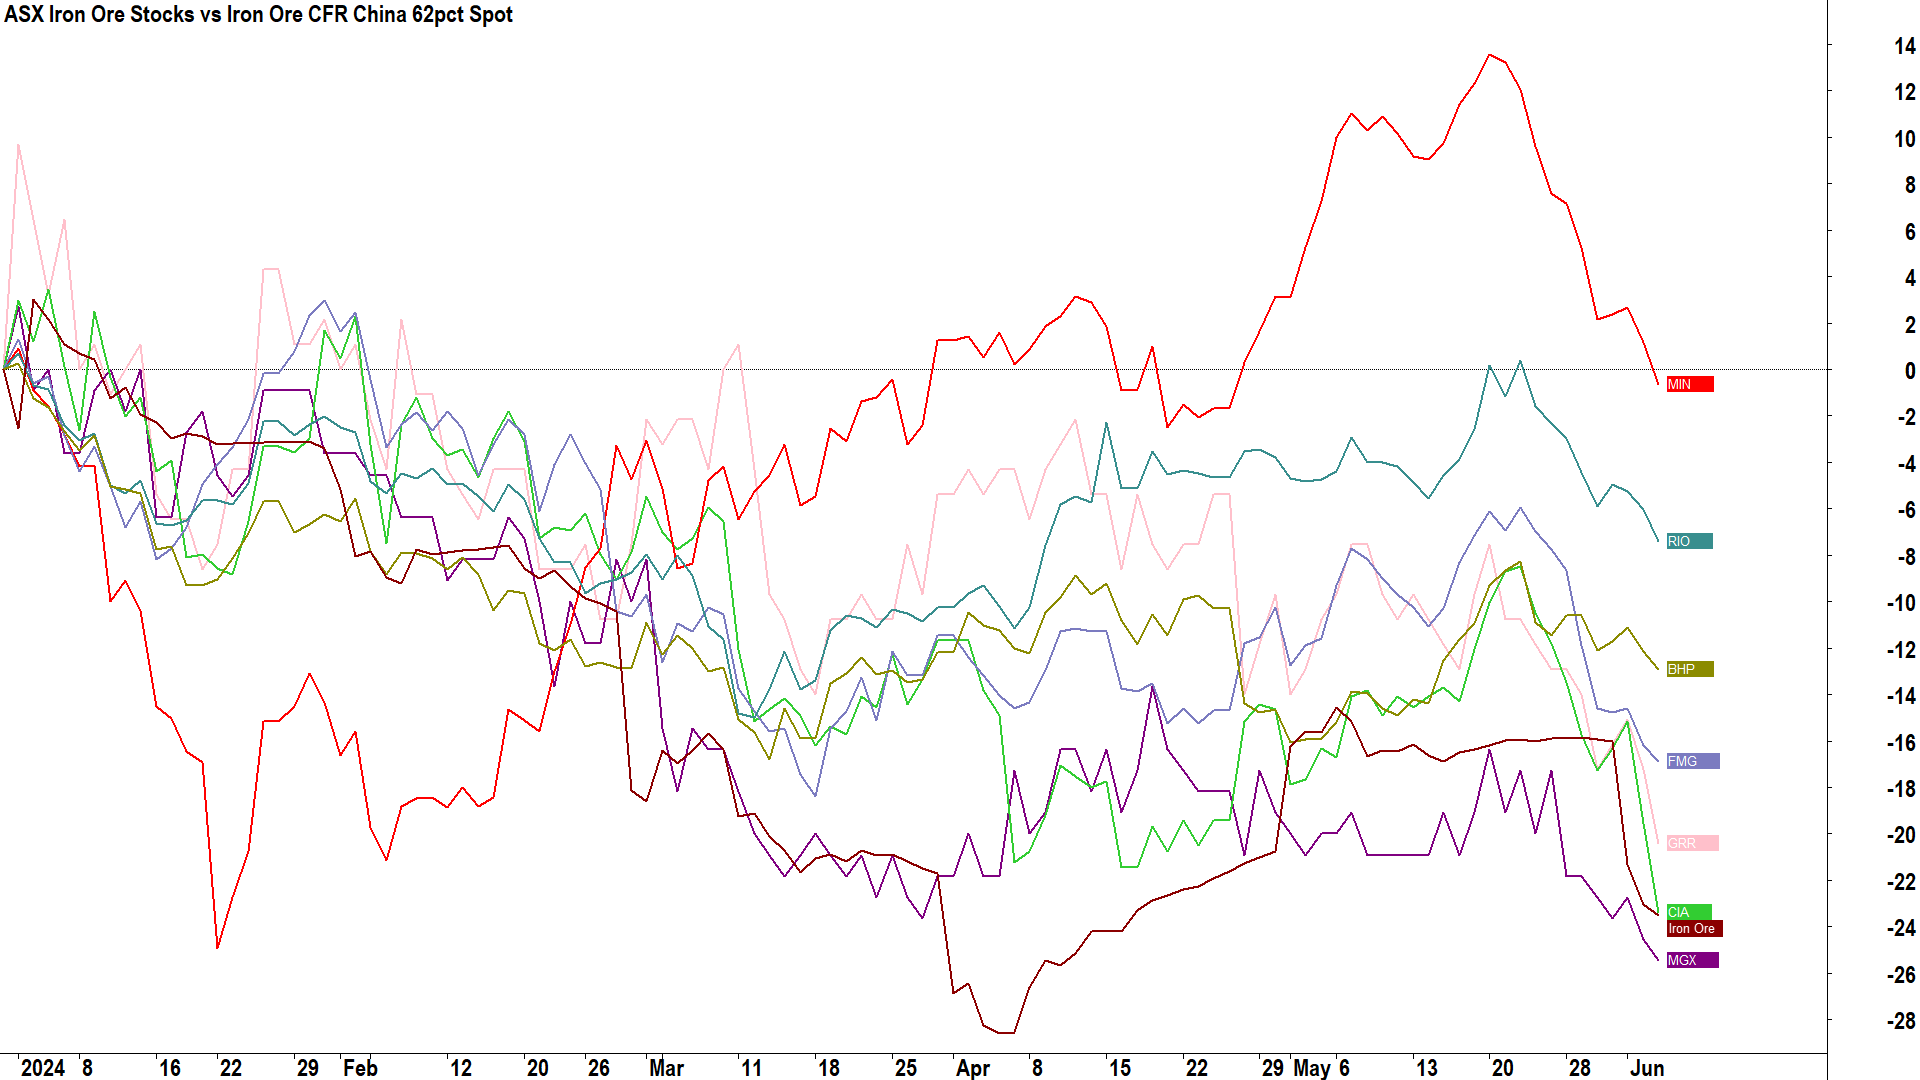 ASX Iron Ore Stocks vs Iron Ore CFR China 62pct Spot